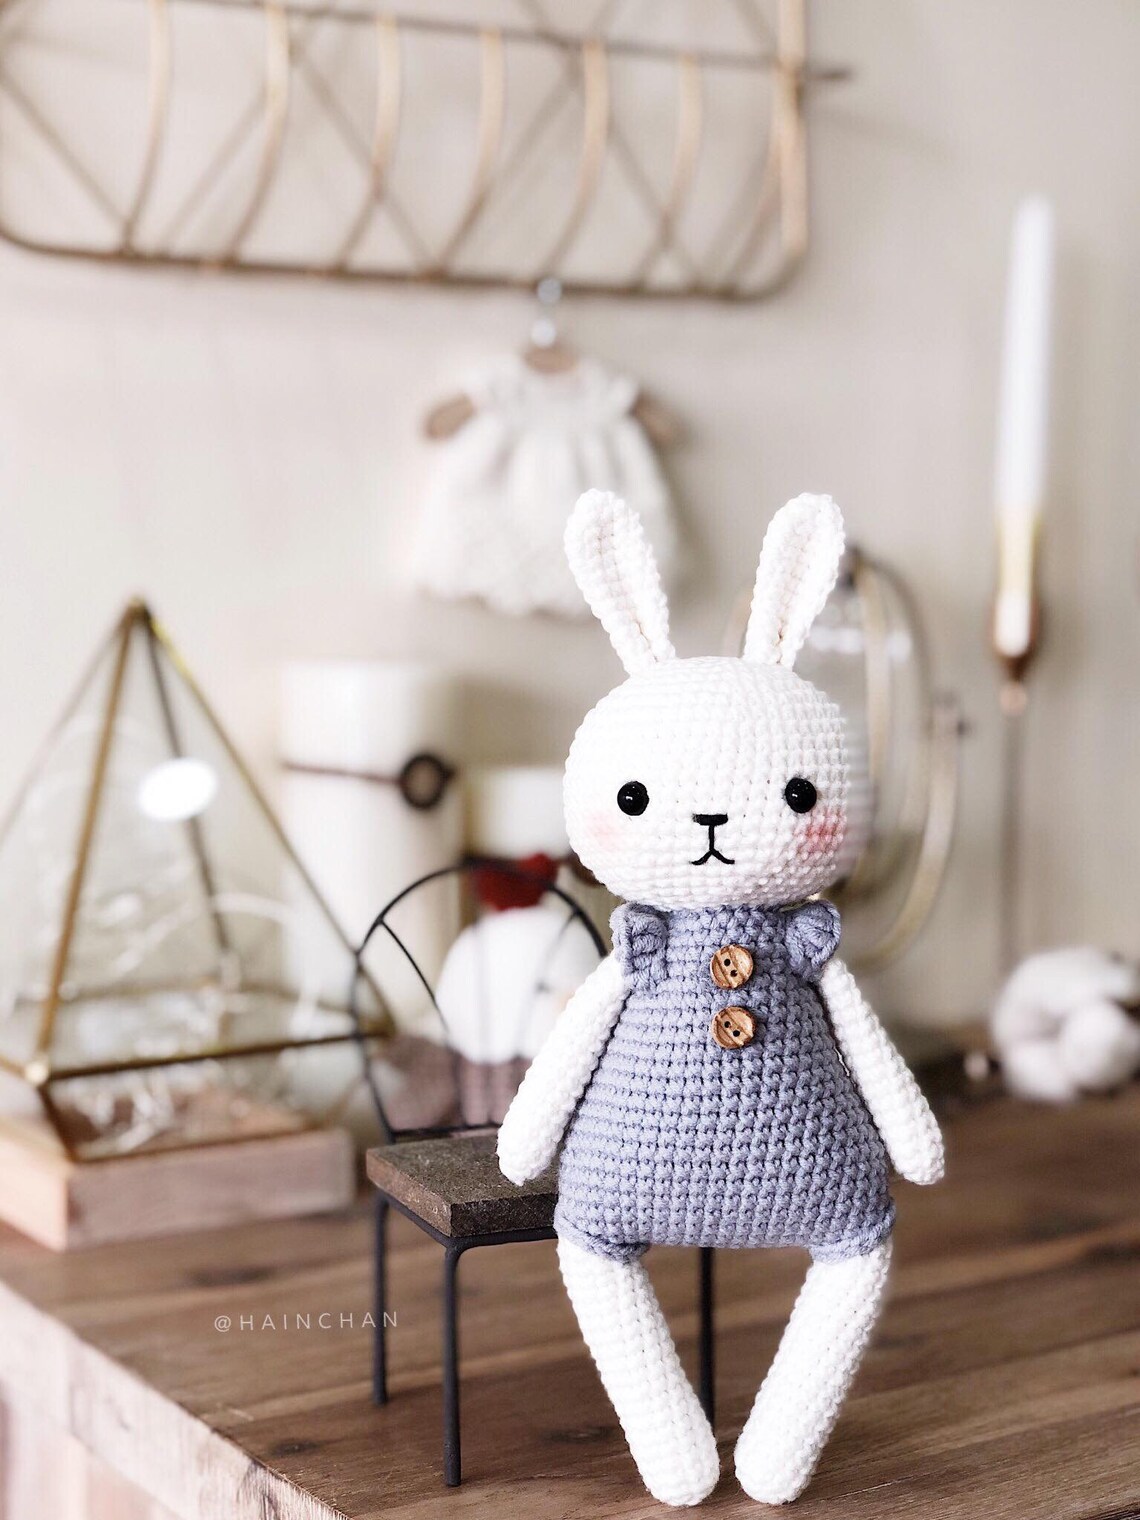 Lucy the Bunny Amigurumi Crochet Pattern – Amigurumi crochet pattern. Instant download. Languages: English